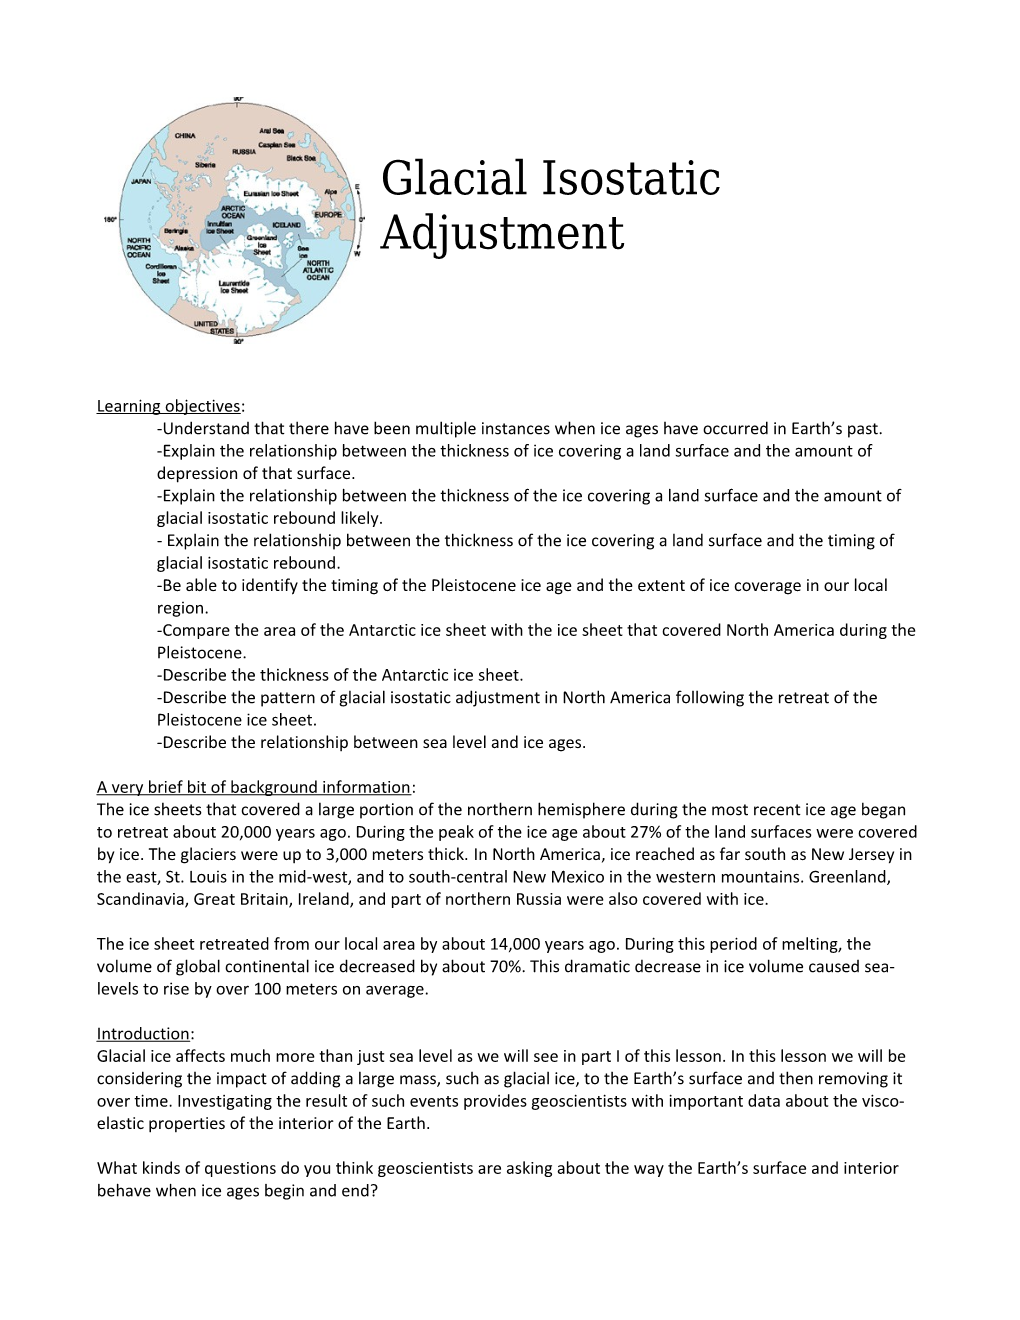 Glacial Isostatic Adjustment